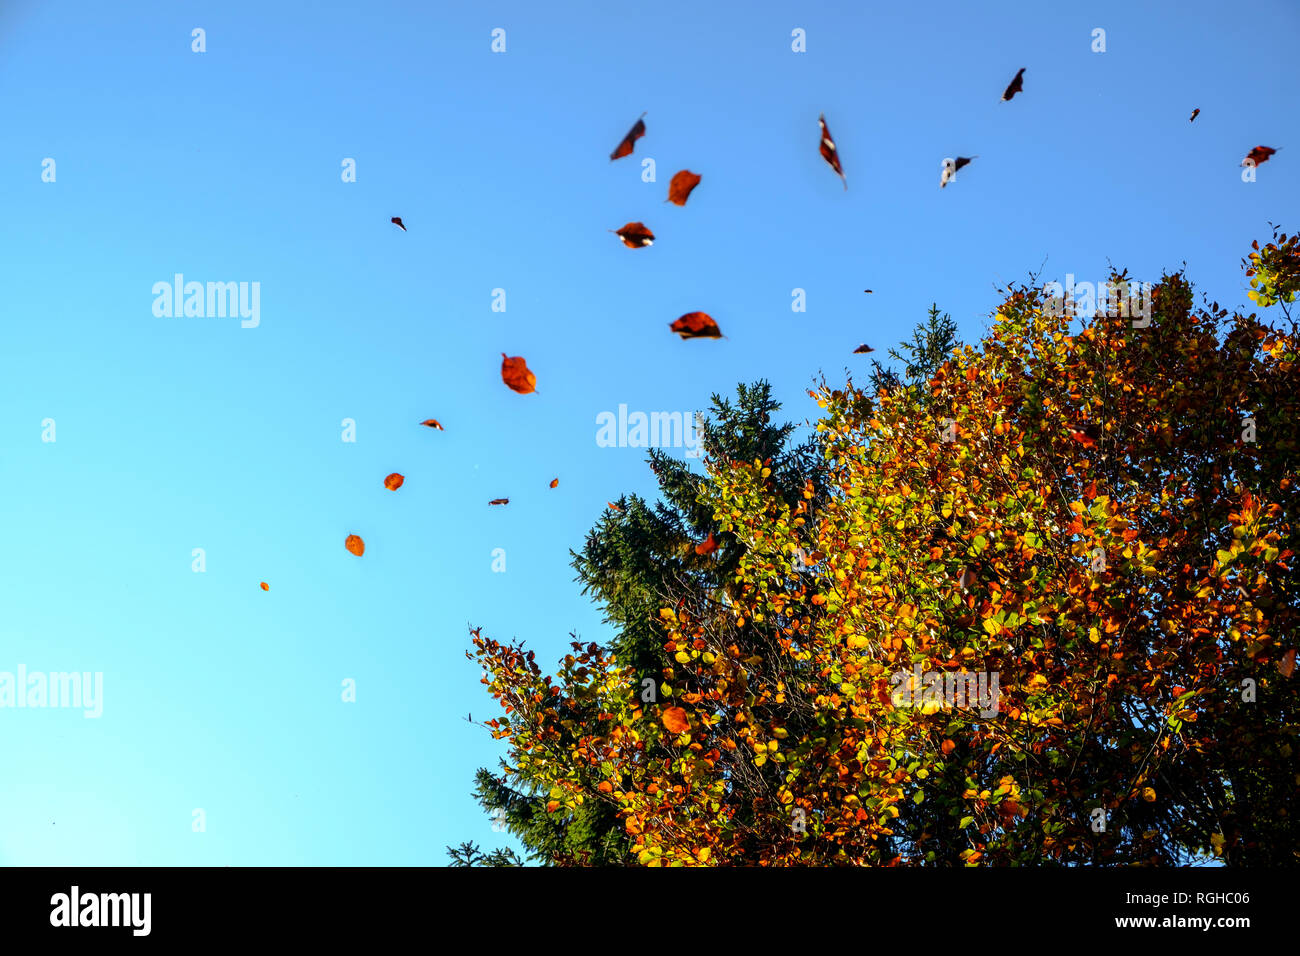 Falling leaves autumn -Fotos und -Bildmaterial in hoher Auflösung – Alamy